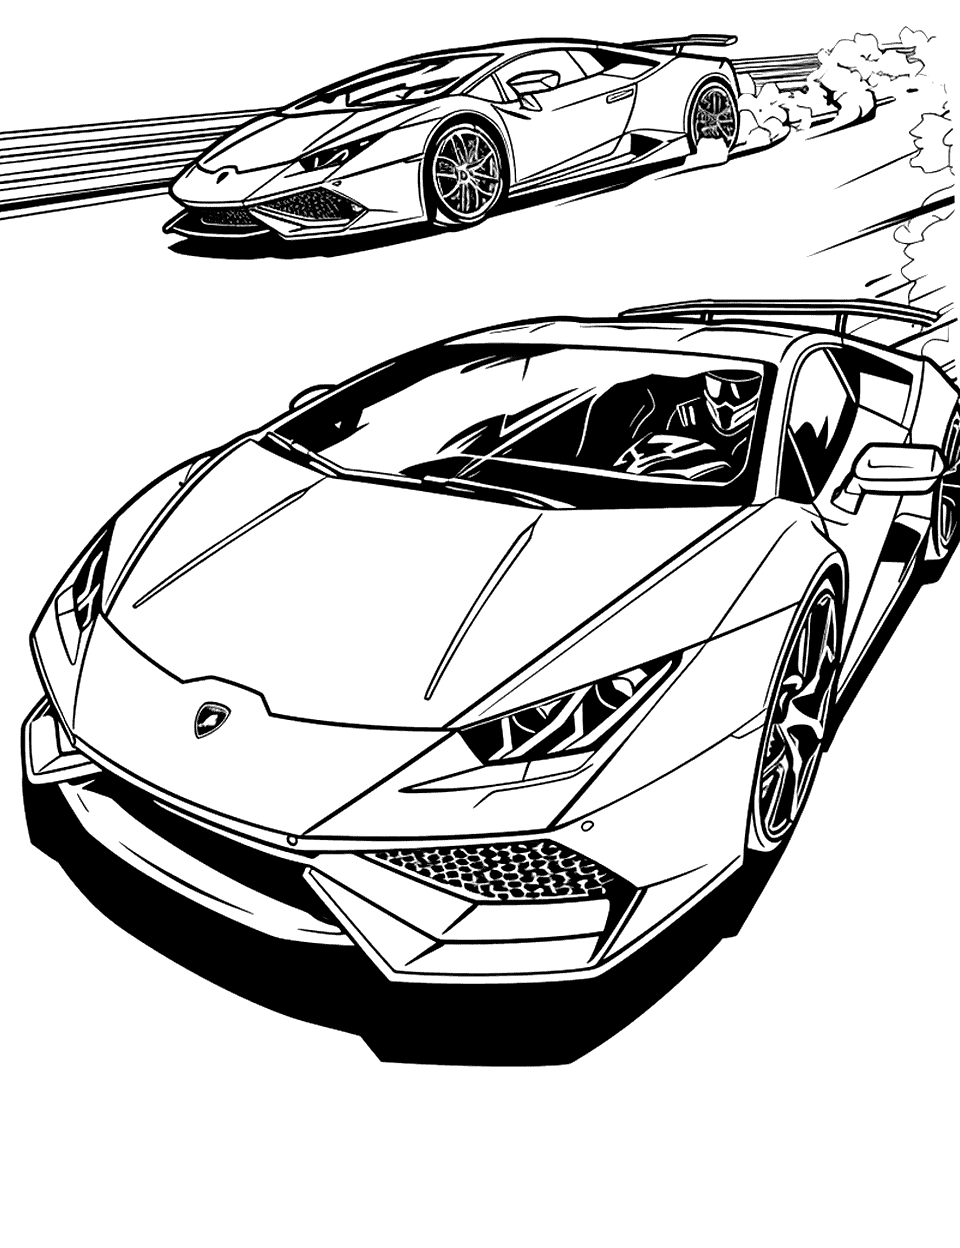 Racing Video Game Lamborghini Coloring Page - Lamborghini race in a kid’s racing video game.